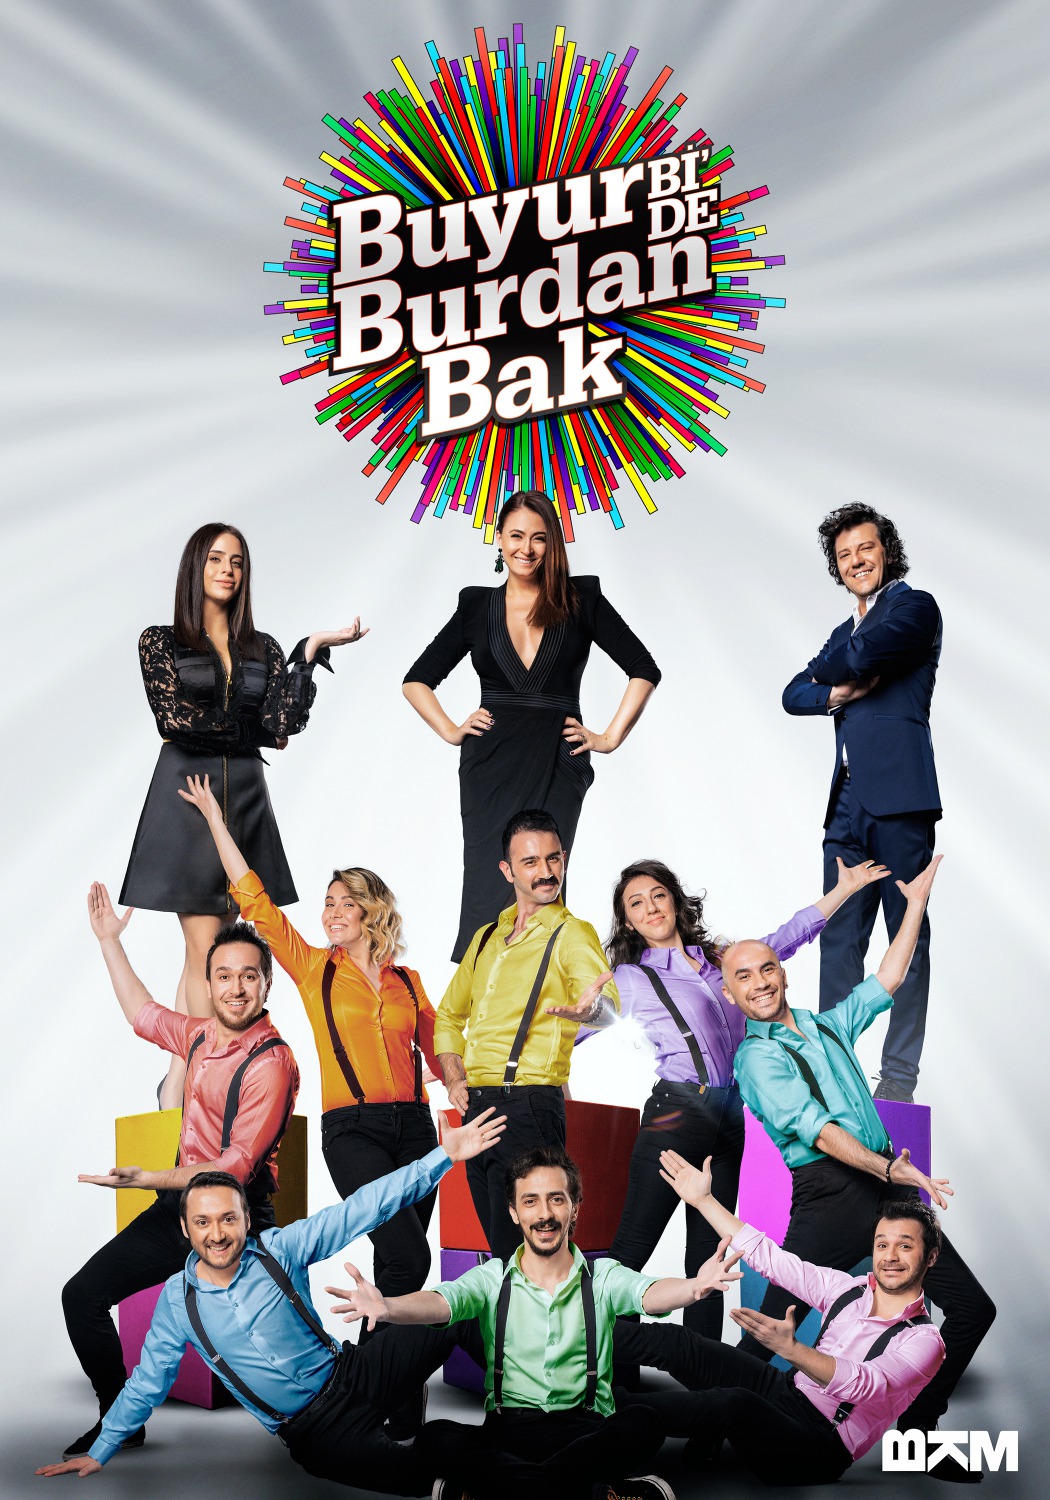 Extra Large TV Poster Image for Buyur Bi' De Burdan Bak 